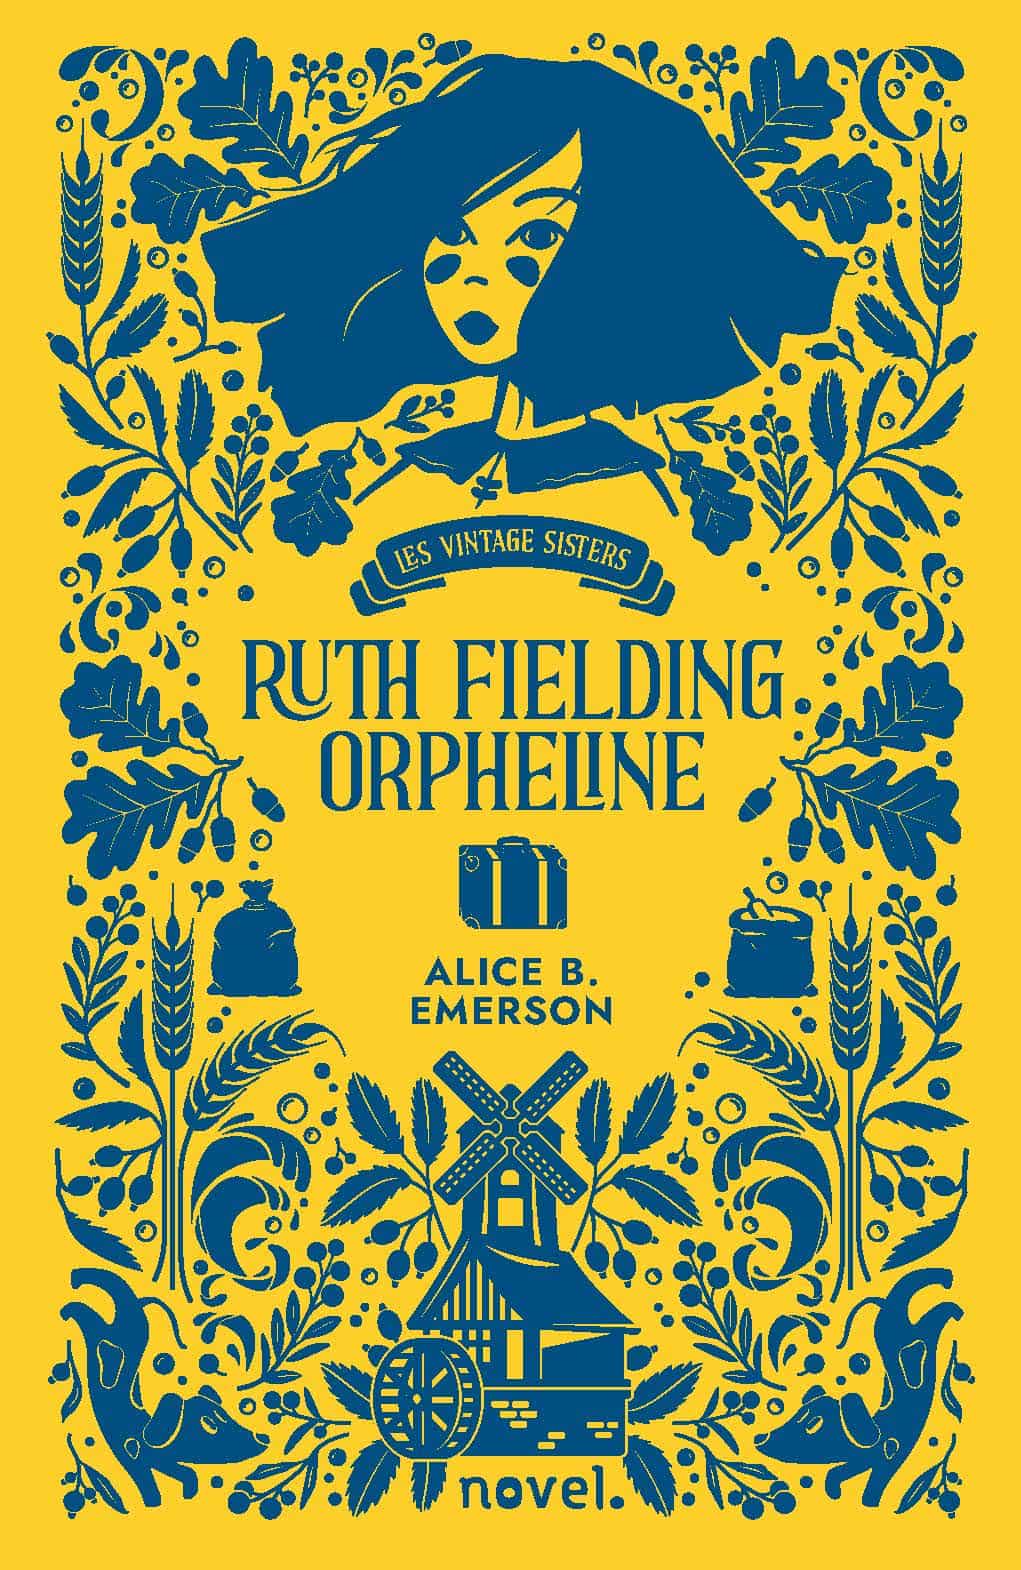 Ruth Fielding, orpheline